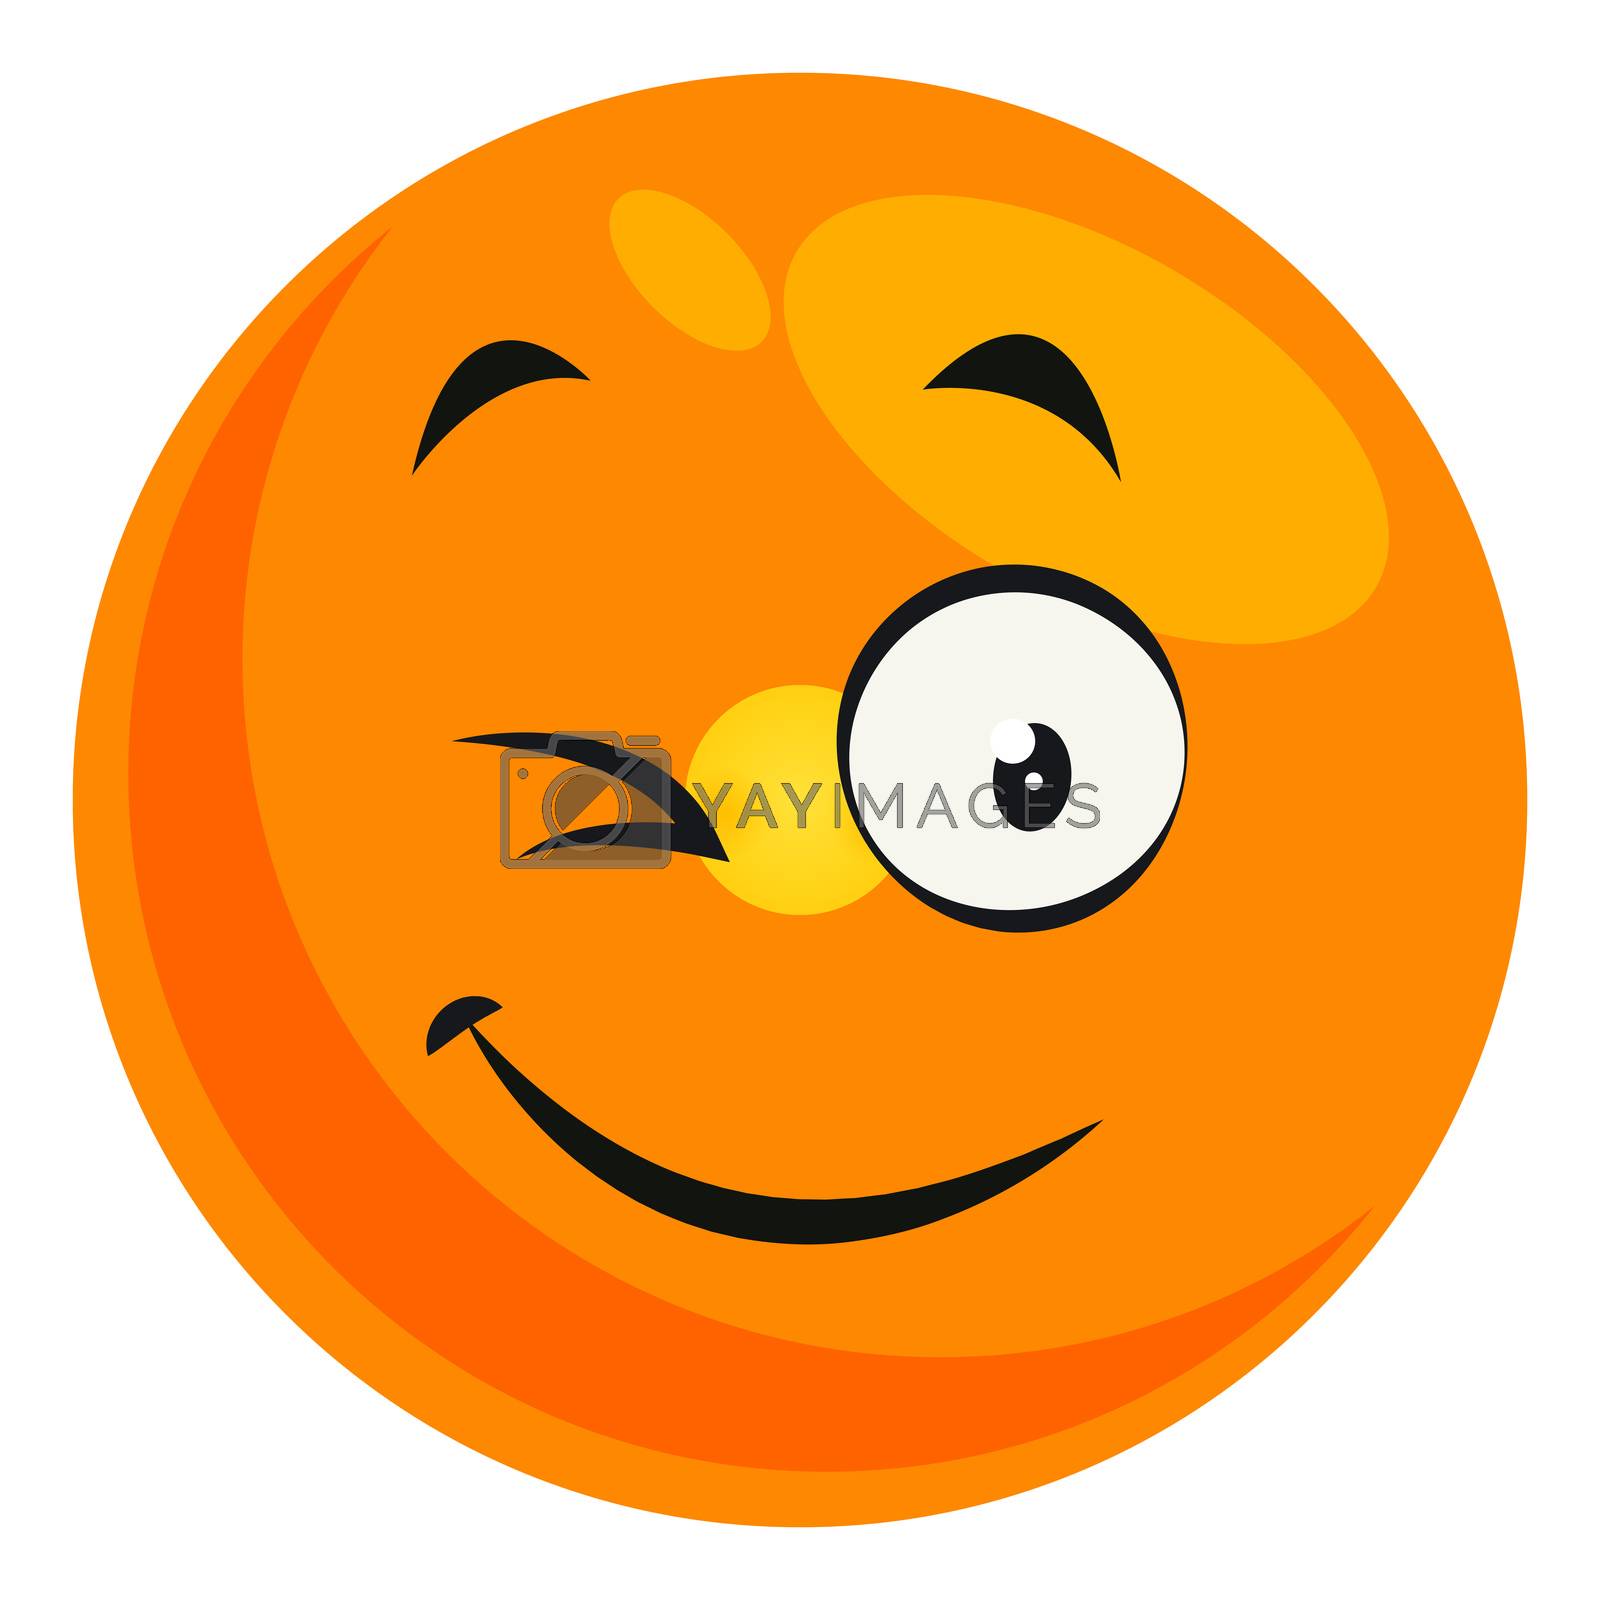 Royalty free image of Winking emoji, illustration, vector on white background by Morphart